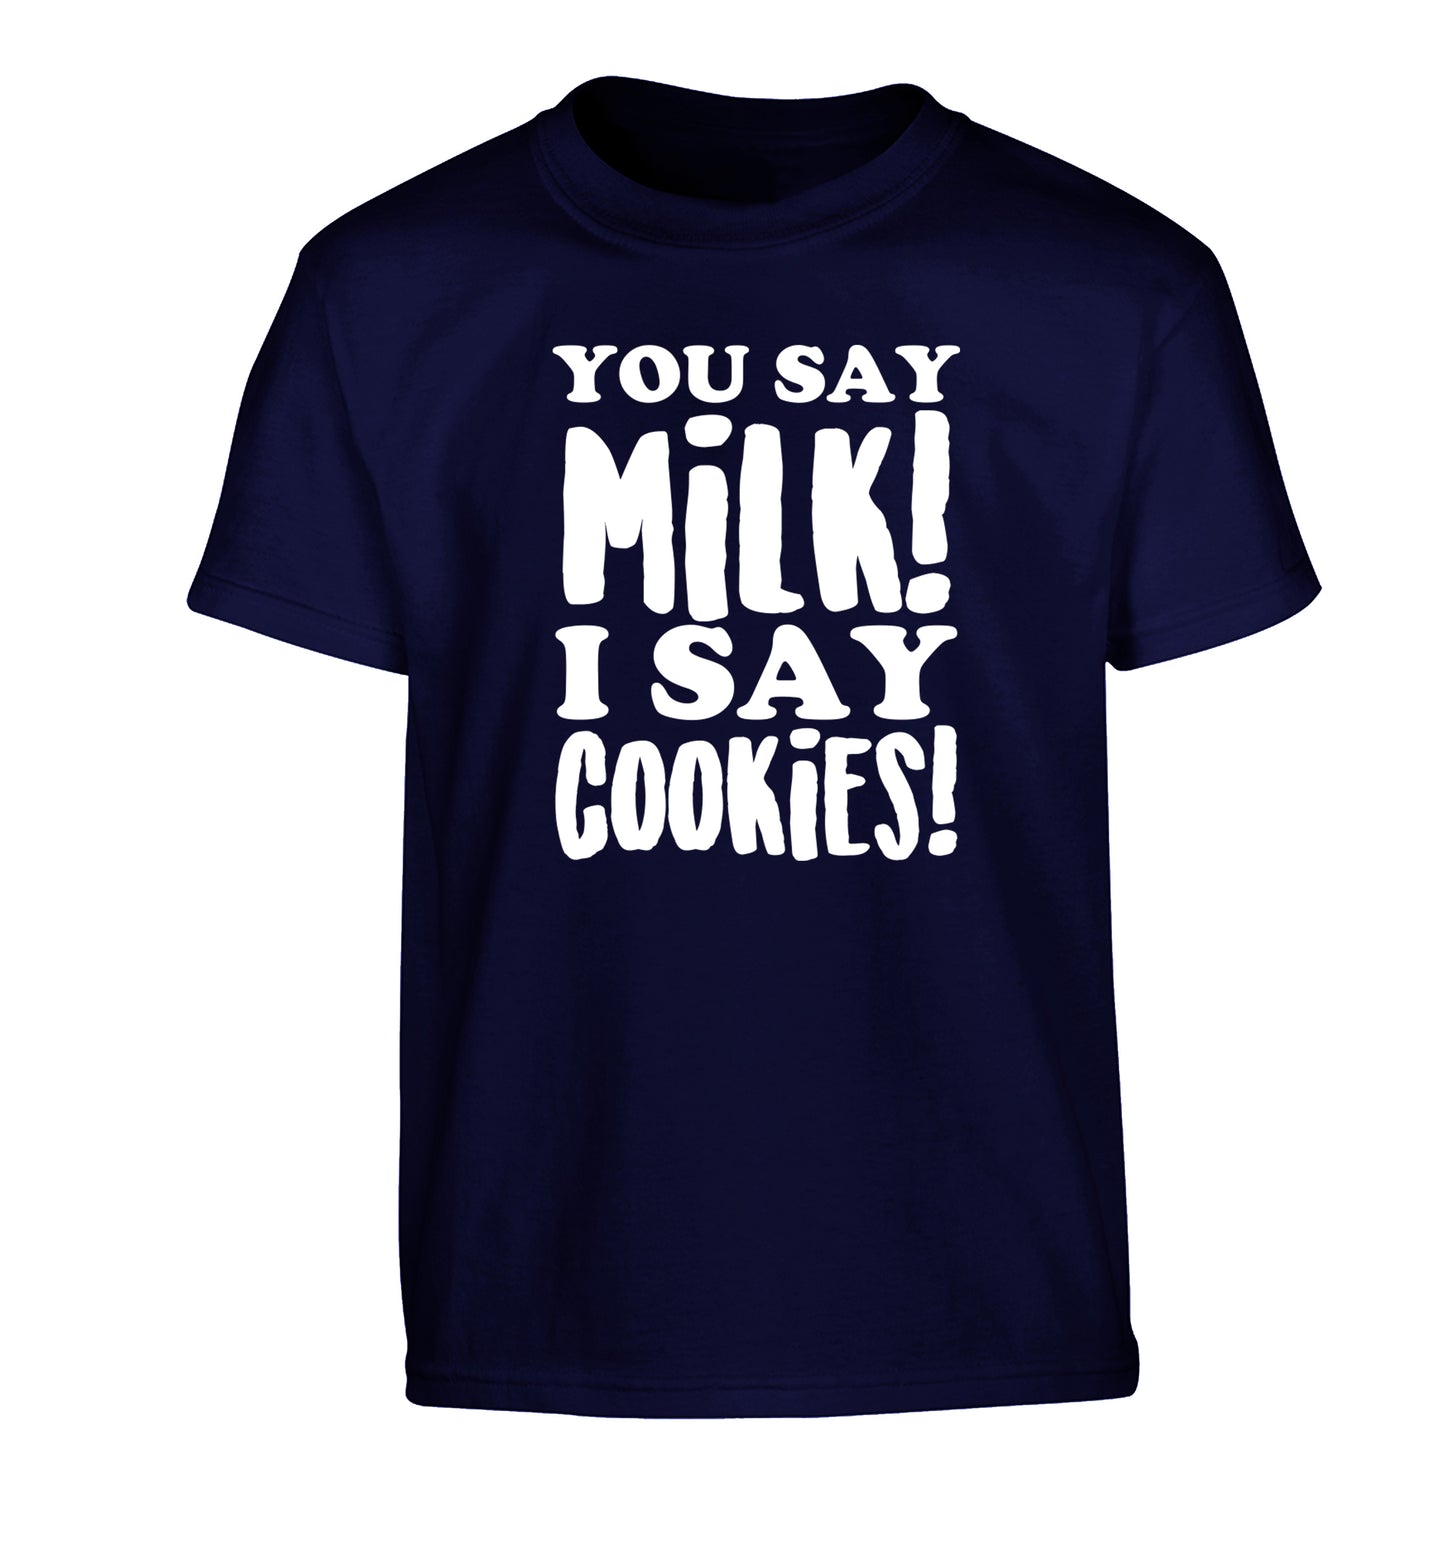 You say milk I say cookies! Children's navy Tshirt 12-14 Years